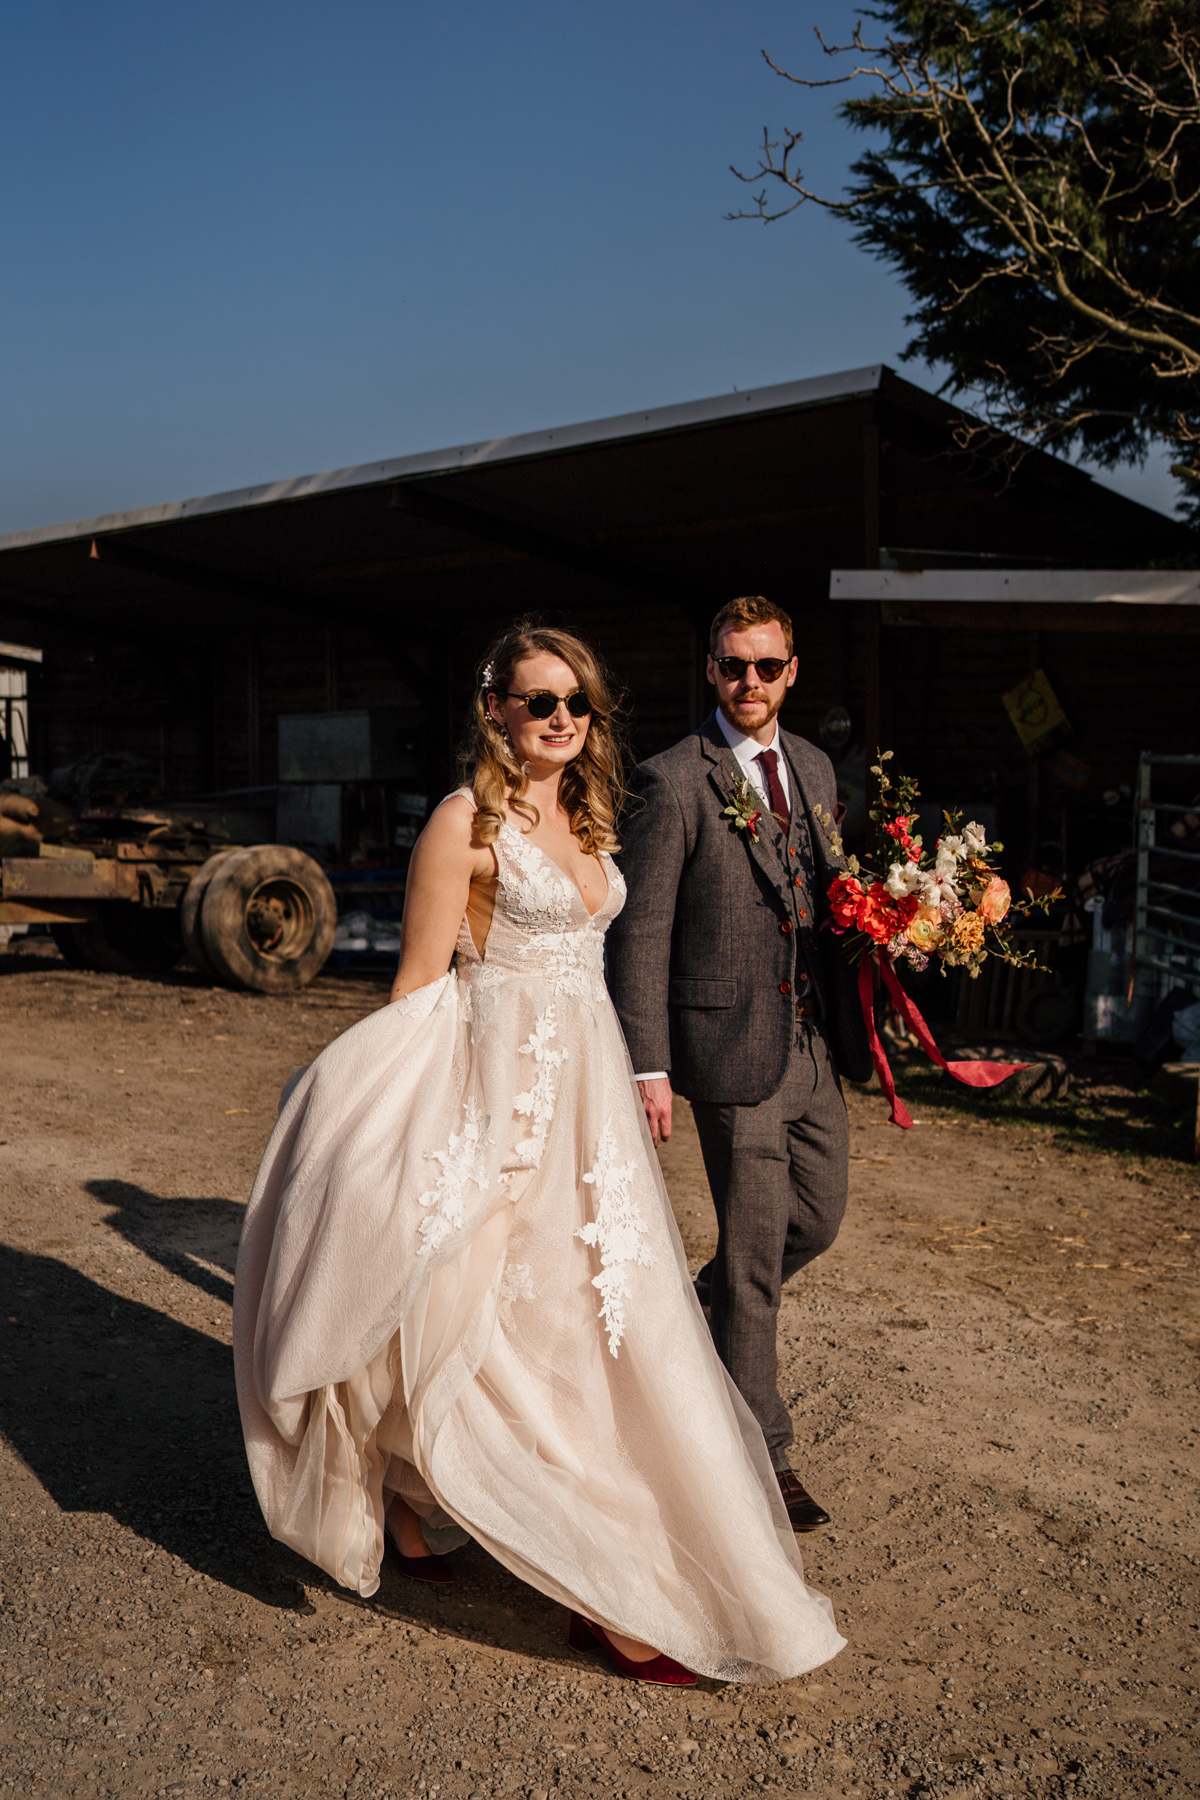 https://www.lovemydress.net/wp-content/uploads/2022/09/83-Novia-DArt-Bride-barn-wedding.jpg